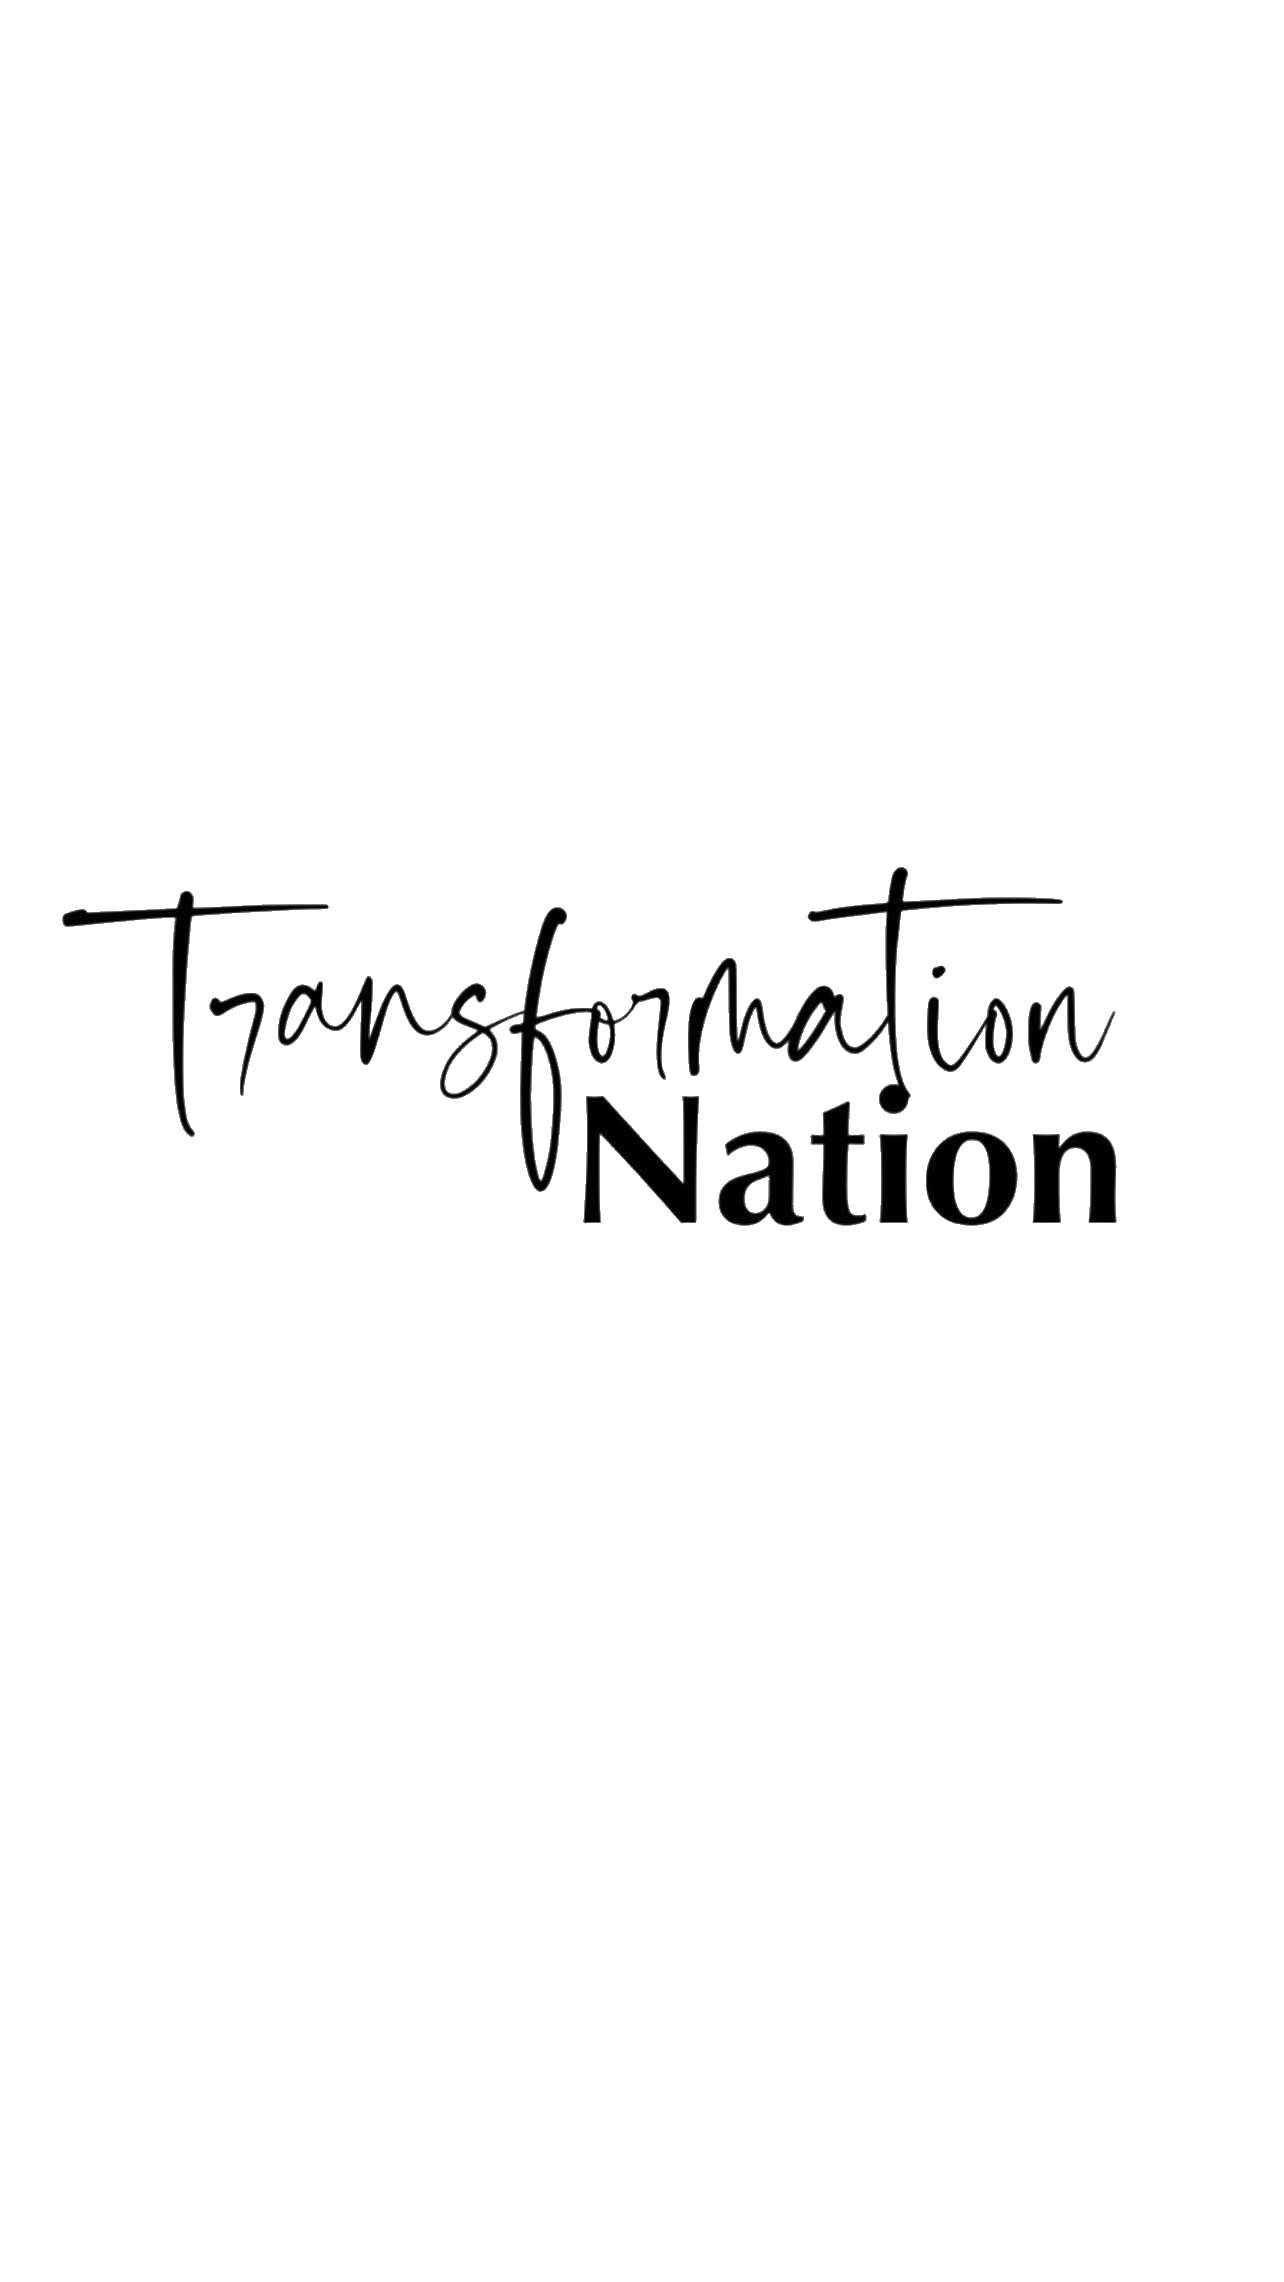 TRANSFORMATION NATION STICKERS